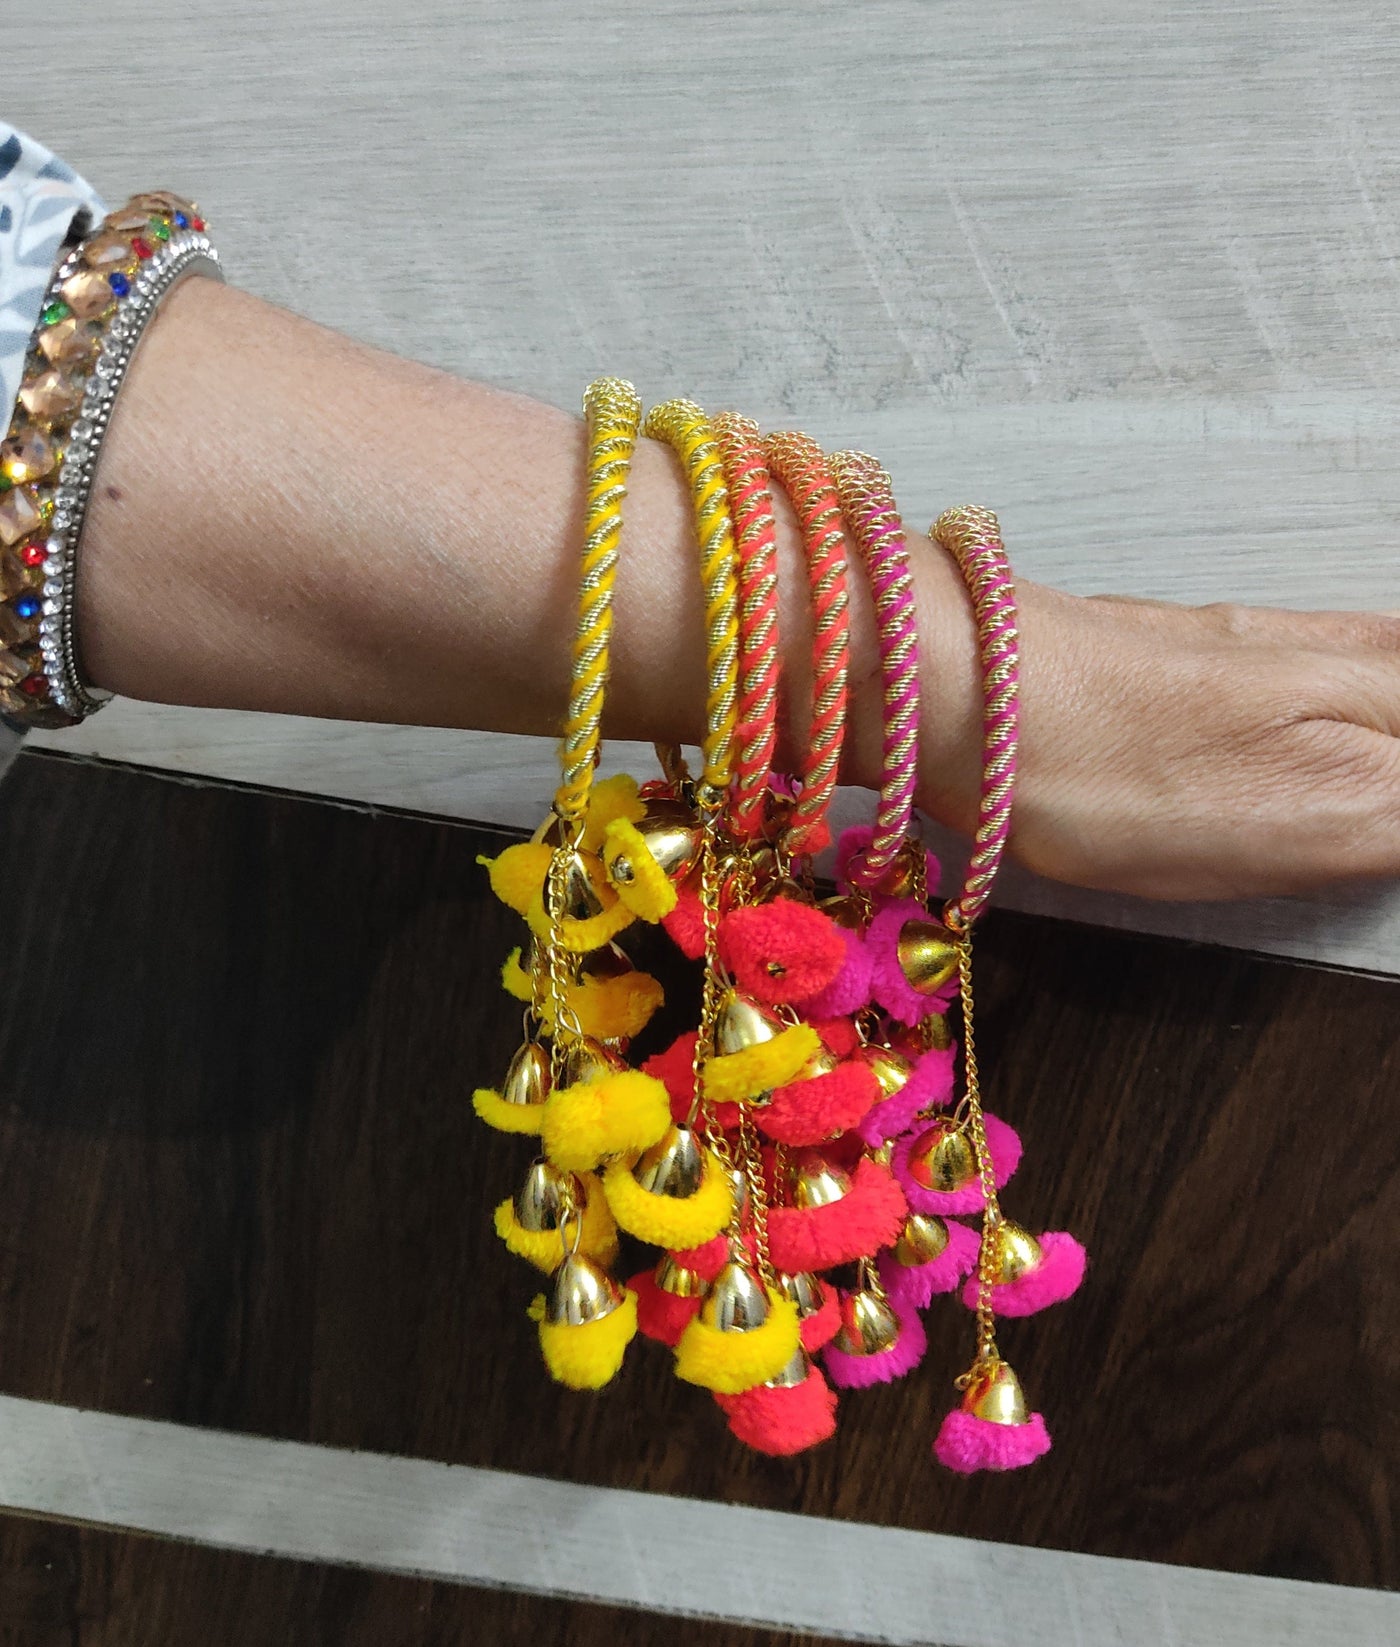 LAMANSH Floral 🌺 Giveaways Assorted colors / 25 Bangles with latkan LAMANSH 25 Pcs Artificial Floral Gota Free size Bangles set with latkan /Sangeet Haldi Mehendi Favors for Bridesmaid / giveaways set